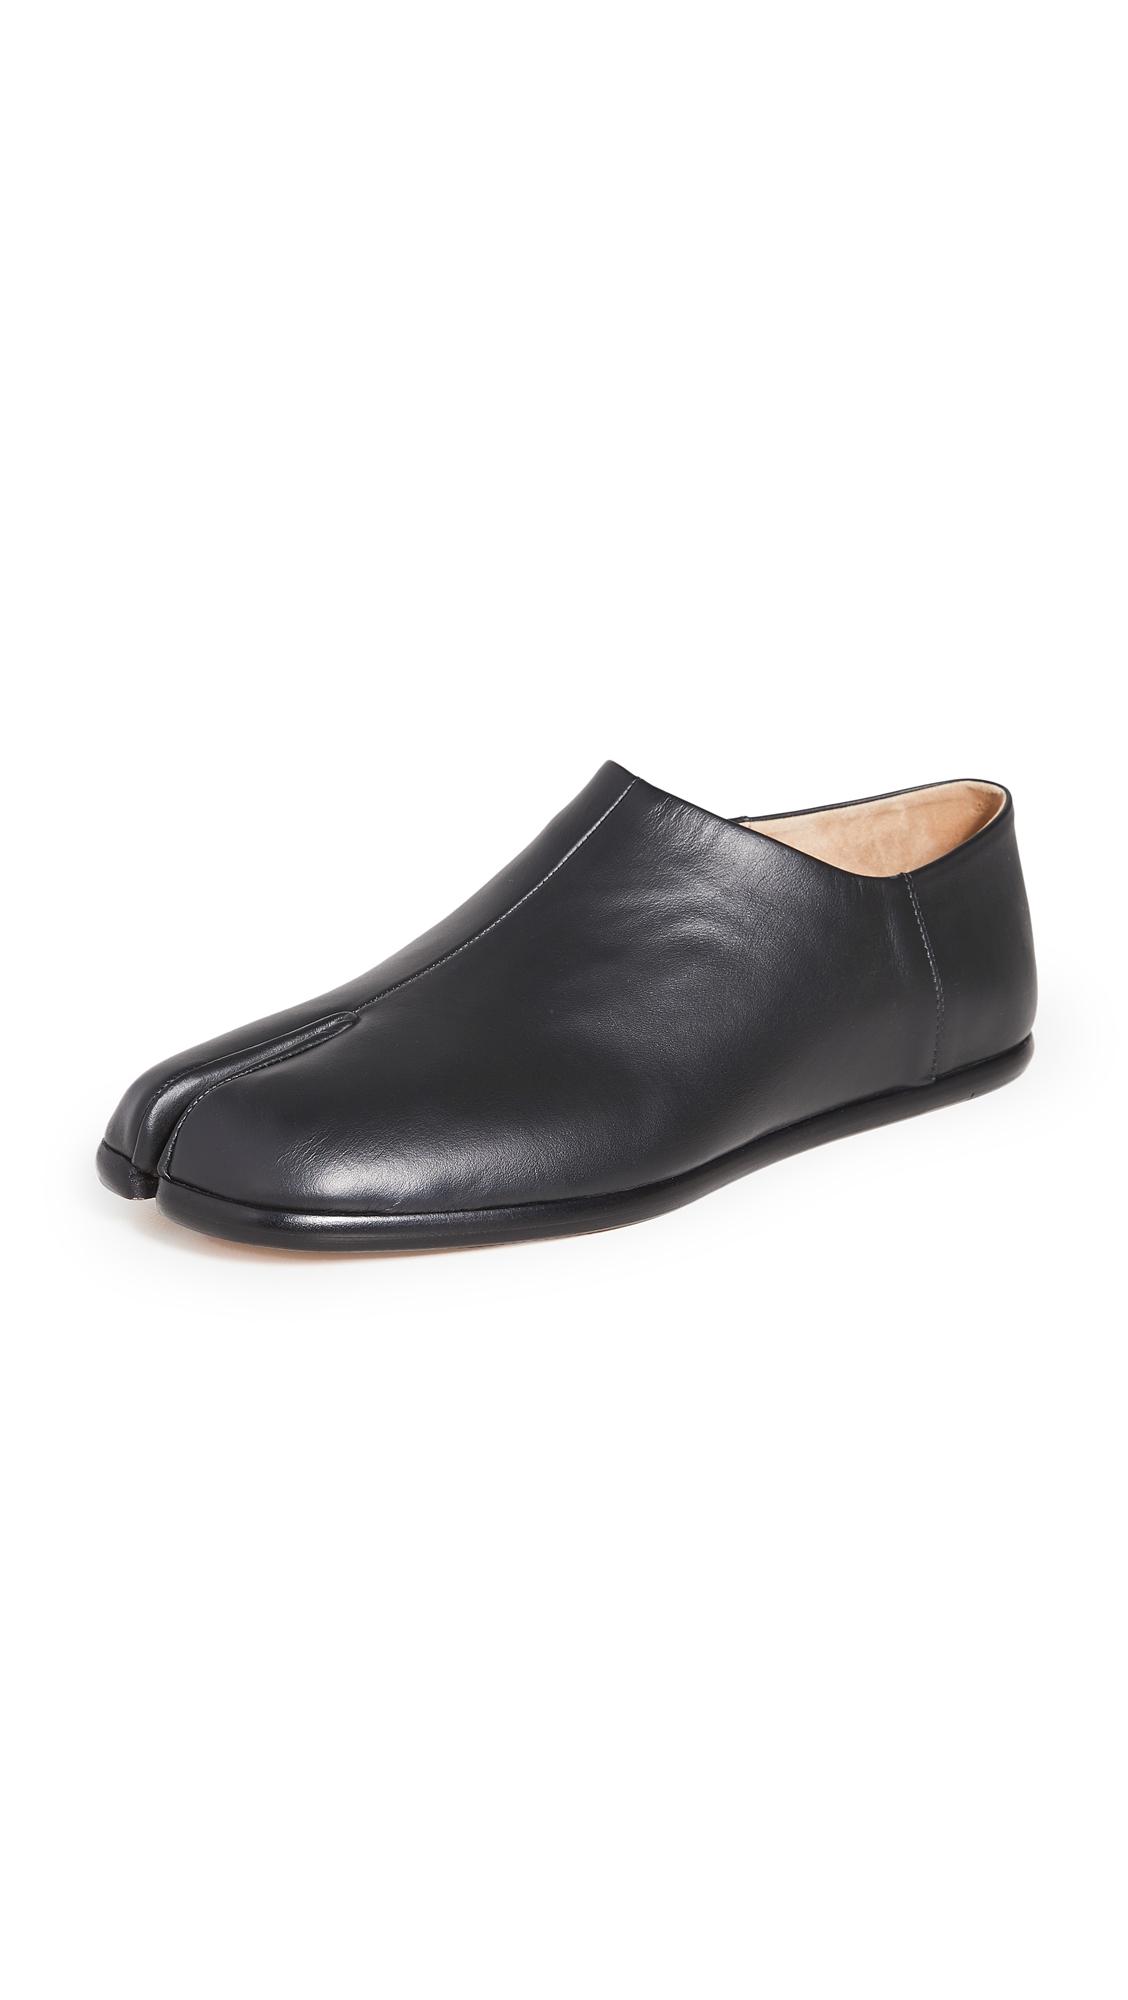 Maison Margiela Leather Tabi Babouche Shoes in Black for Men - Lyst